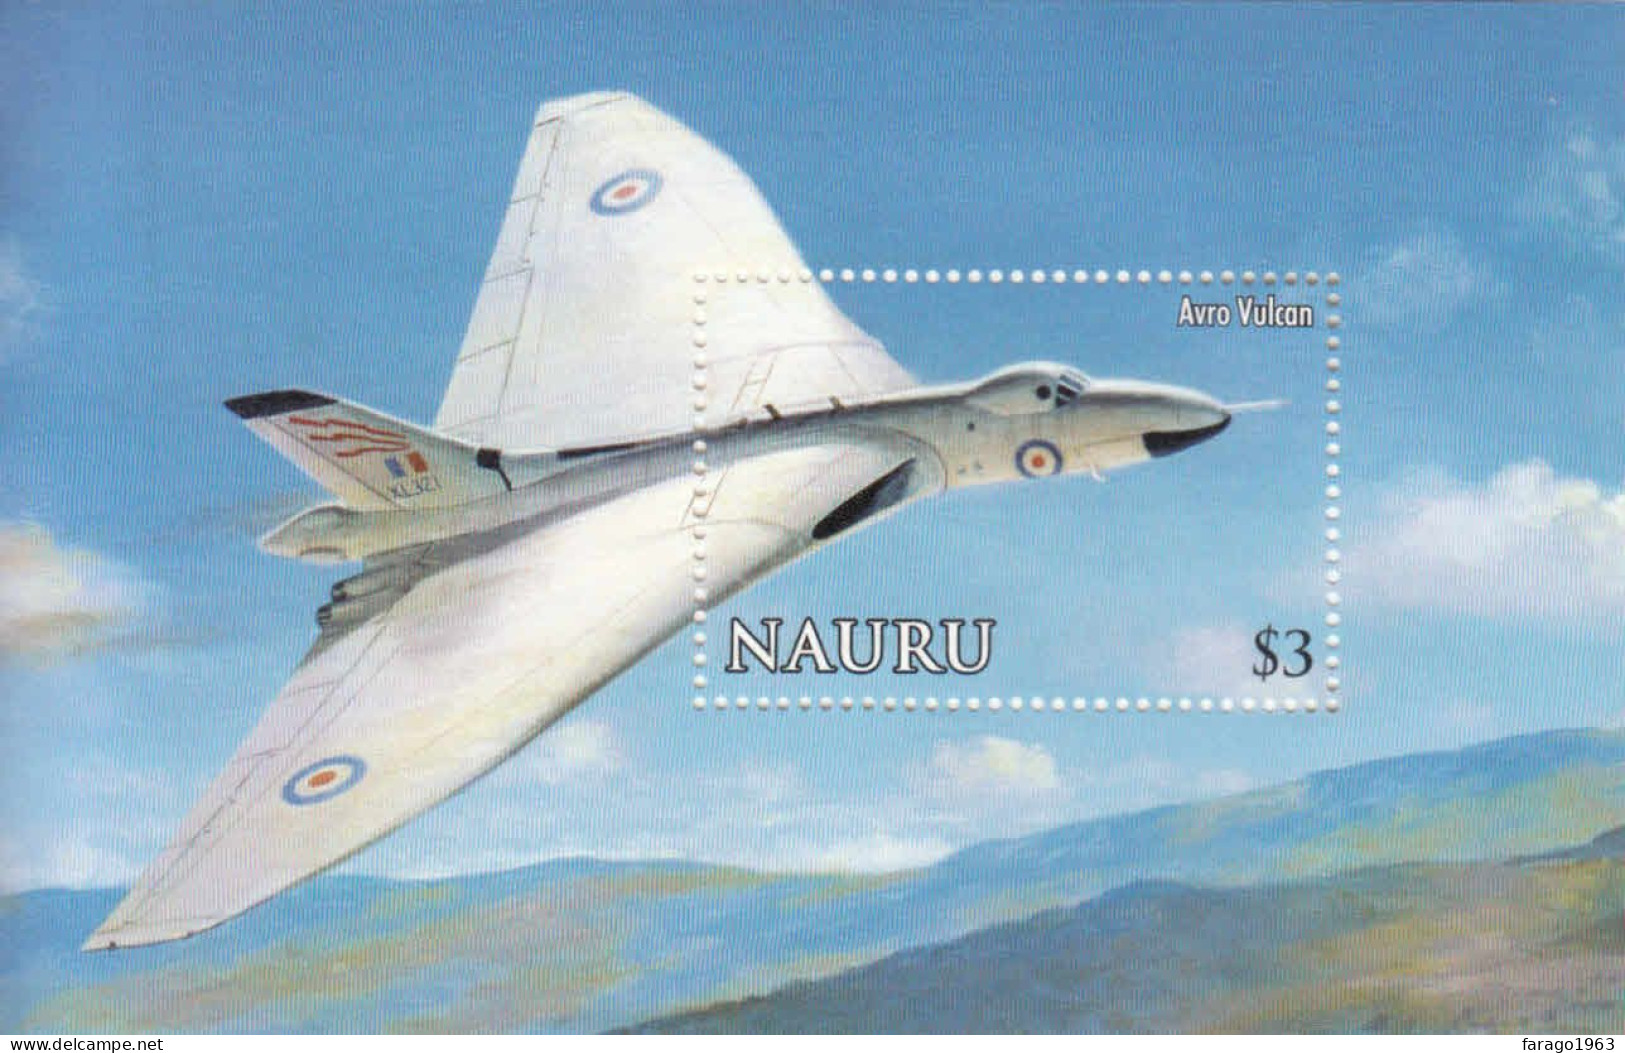 2008 Nauru RAF Avro Vulcan Military Aviation Souvenir Sheet MNH - Nauru